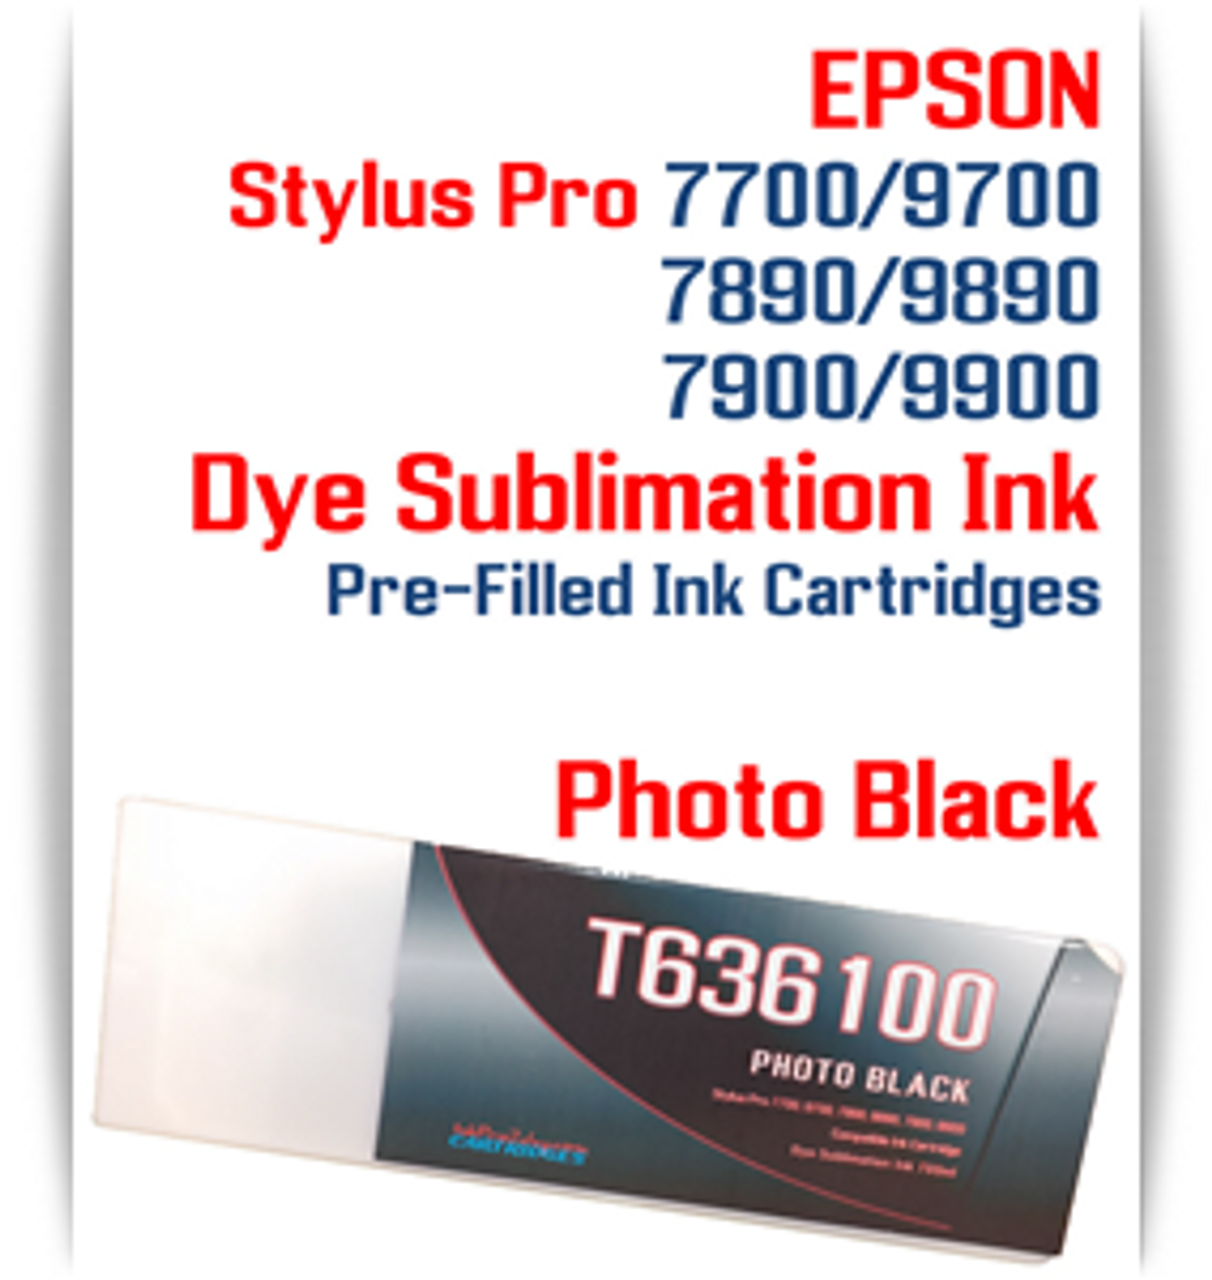 Photo Black Epson Stylus Pro 7700/9700, 7890/9890, 7900/9900 Pre-Filled Dye Sublimation Ink Cartridge